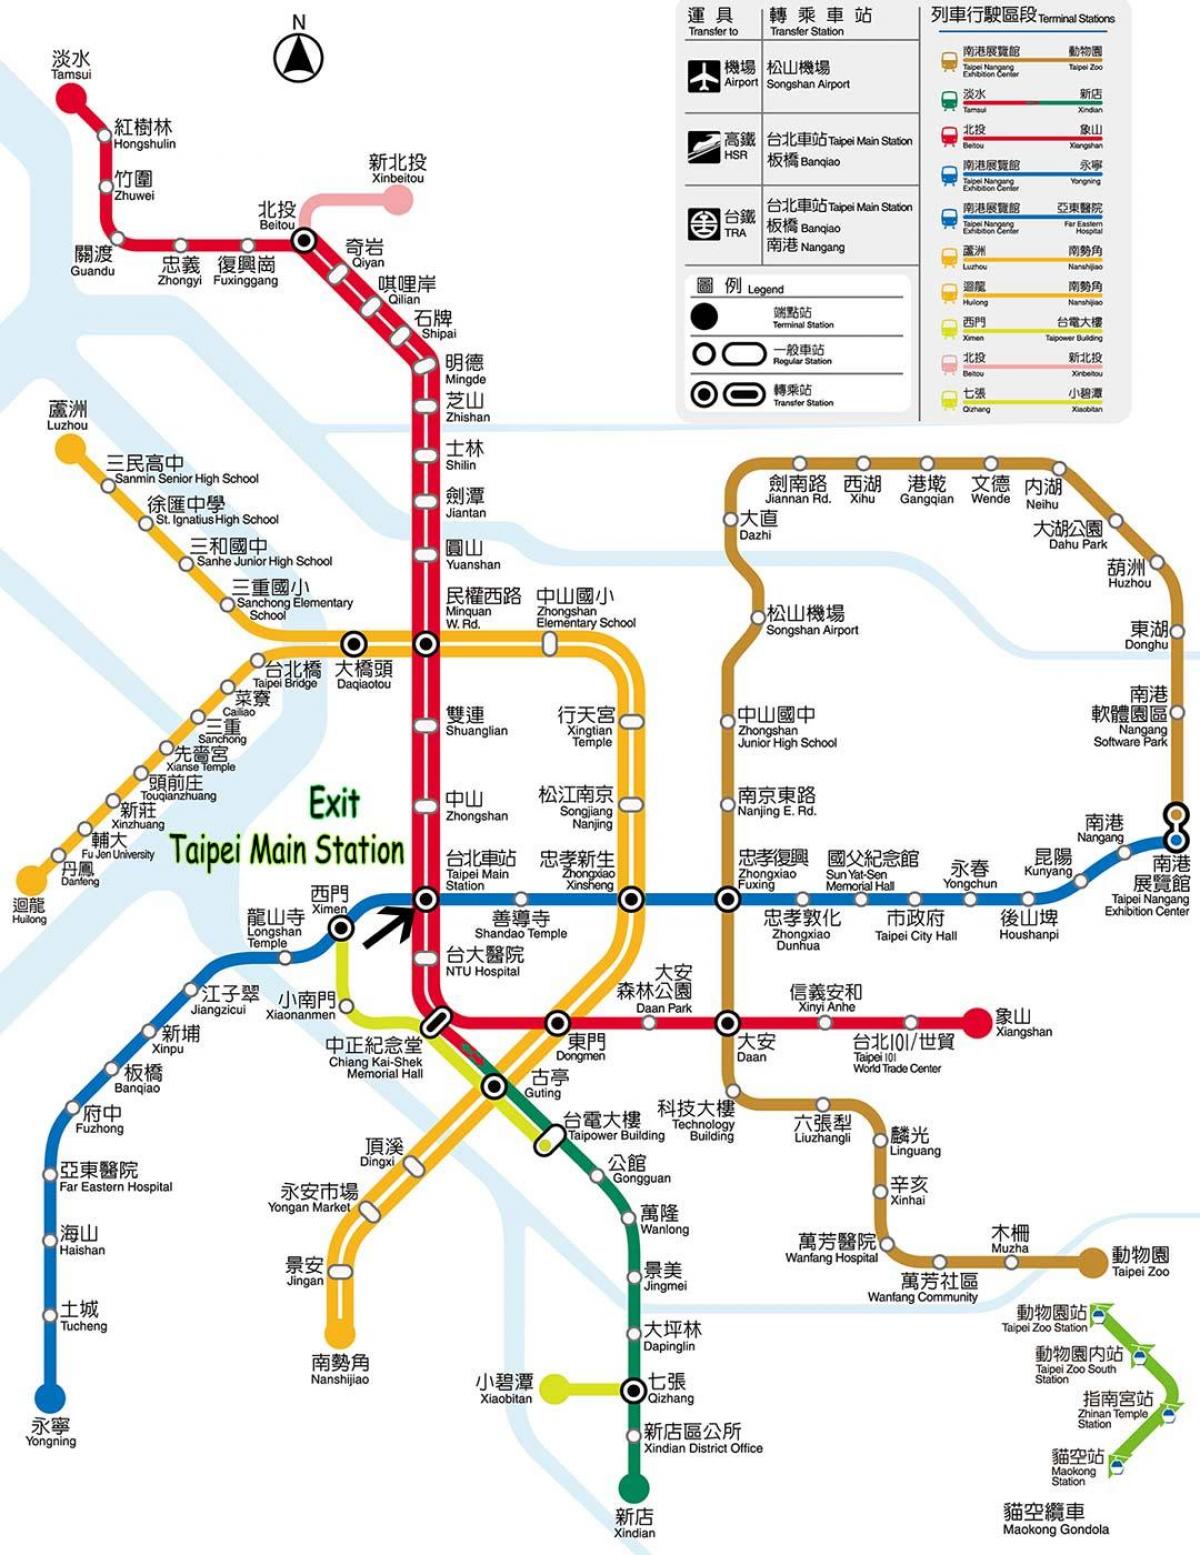 Taipei main station underground mall map